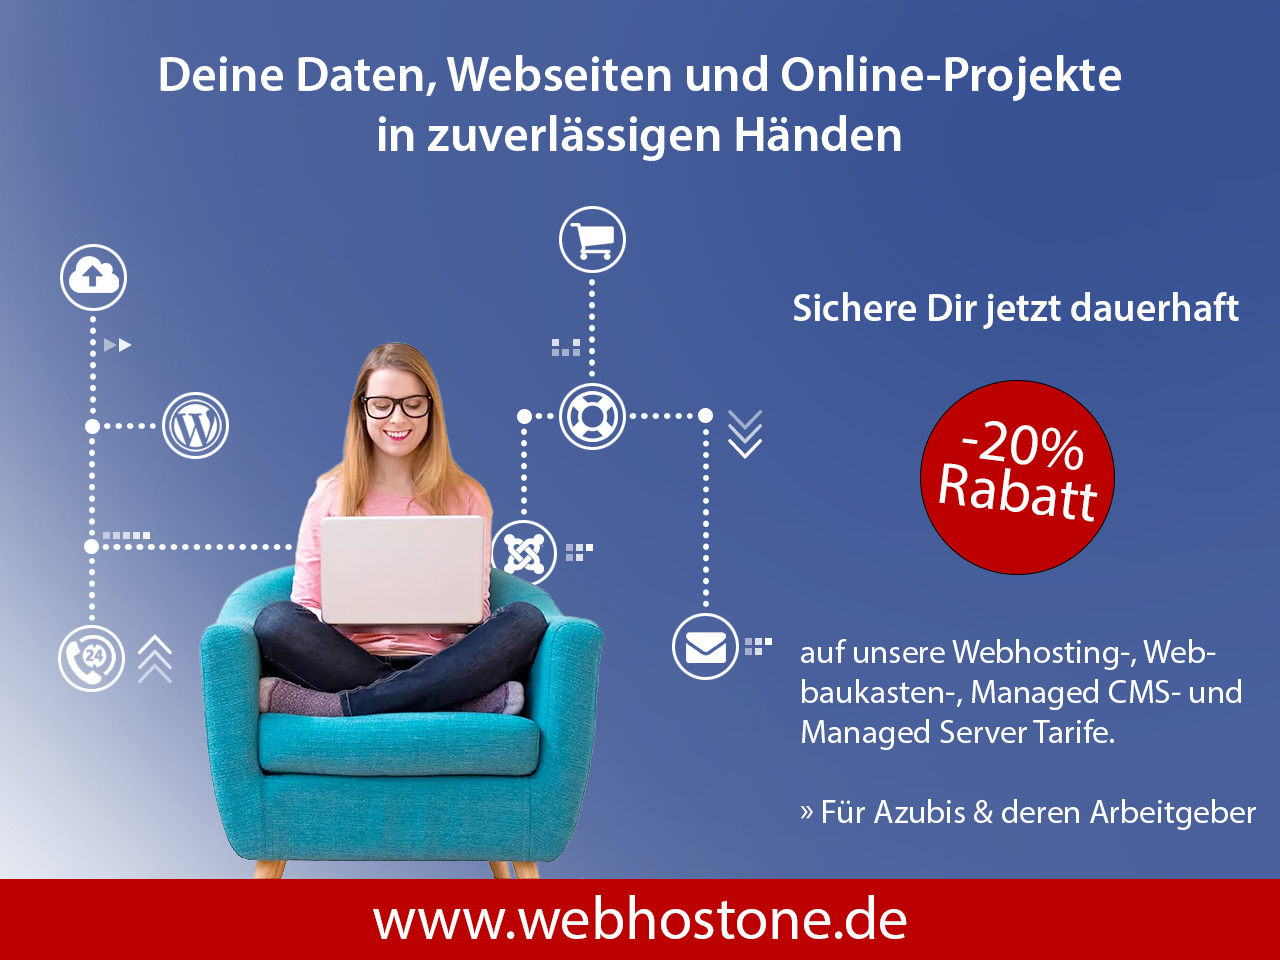 WebhostOne GmbH - 20% Rabatt auf Webhosting Tarife und Managed Server